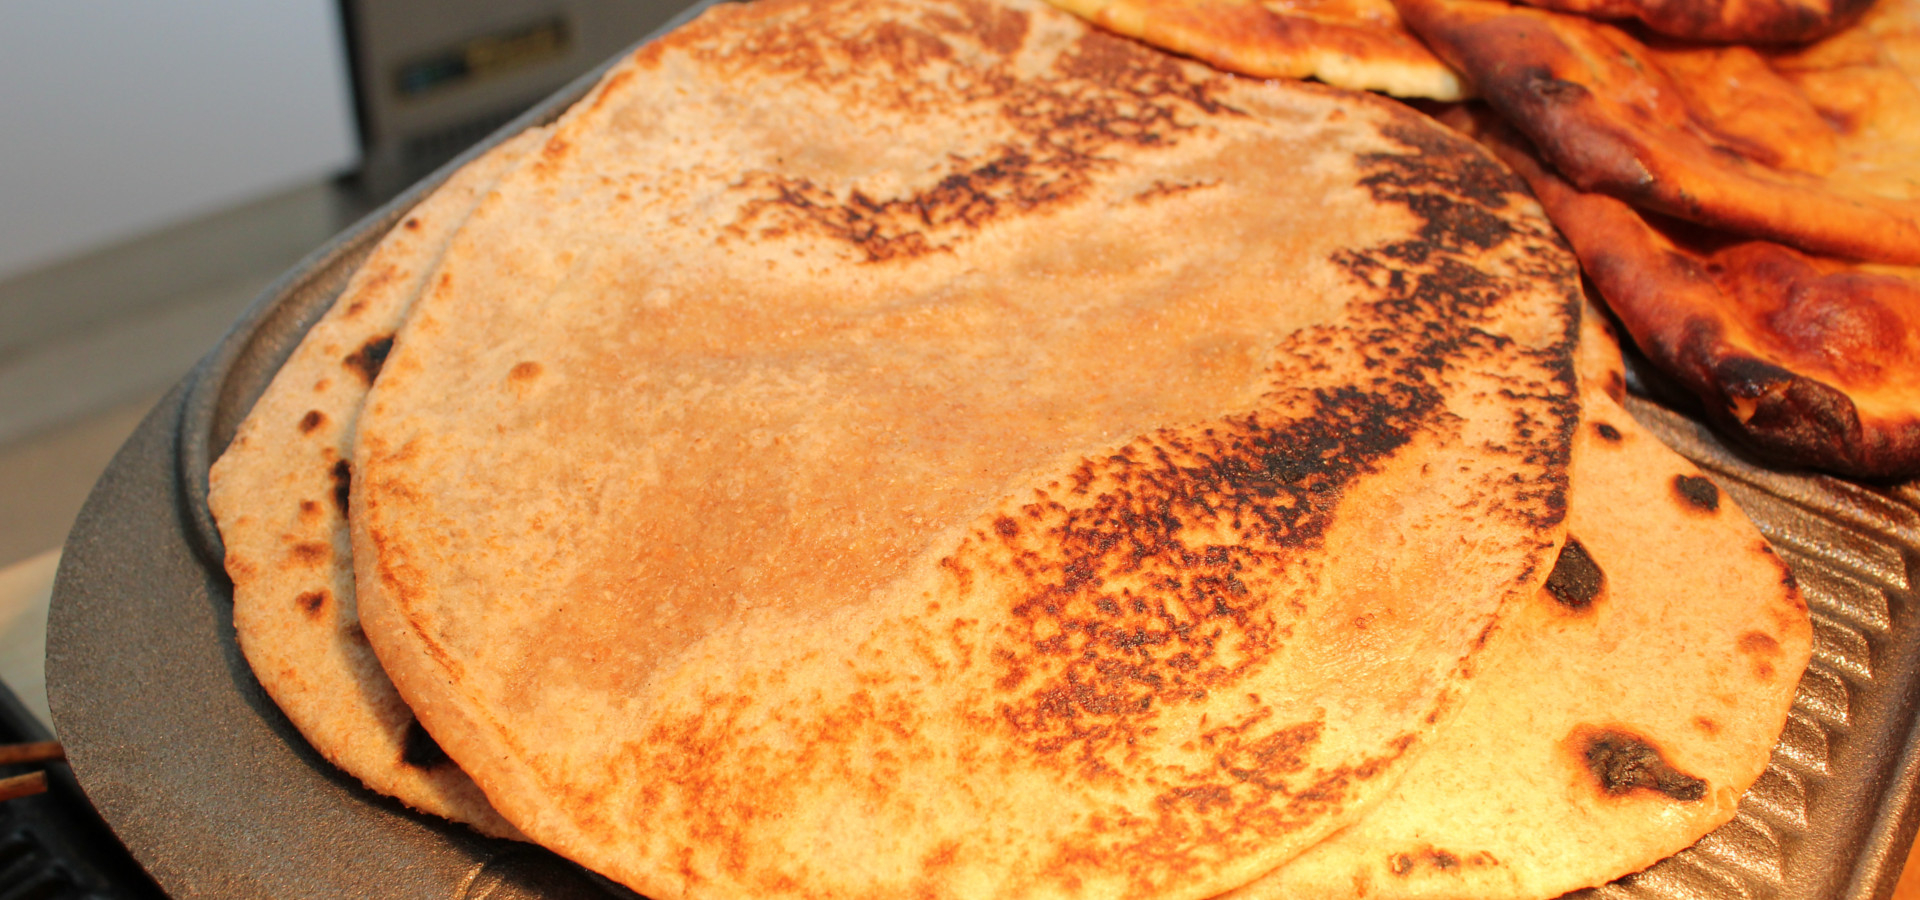 Chapati (Indian Flat Bread)